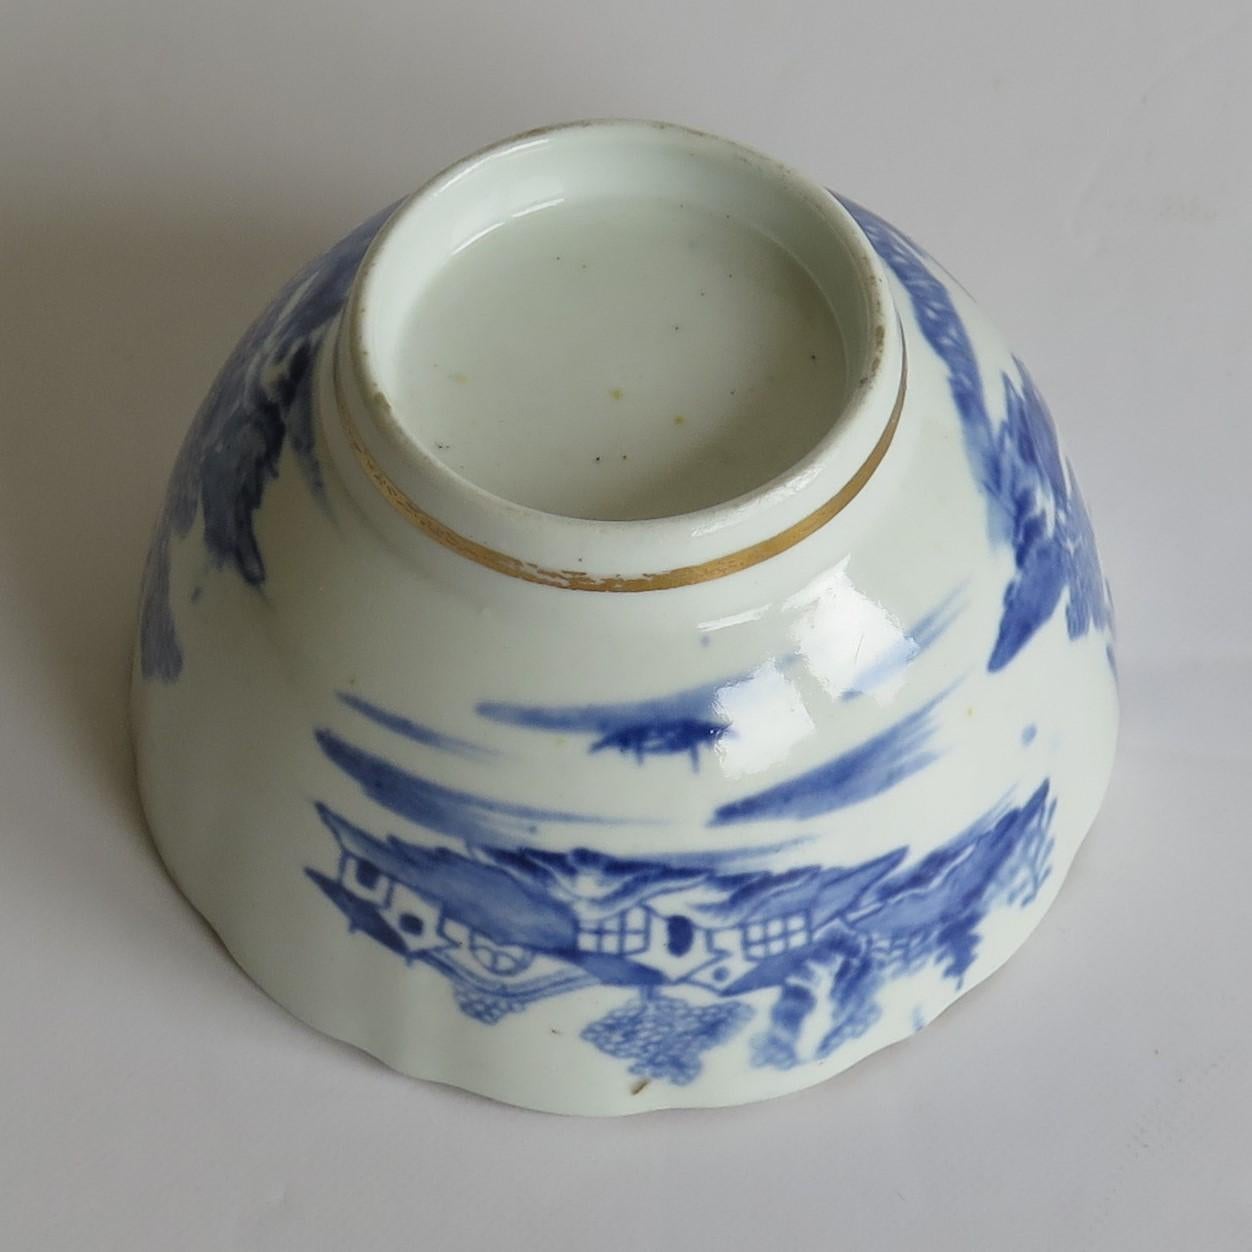 Miles Mason Porcelain Bowl Blue and White Pagoda Pattern, English, circa 1805 12